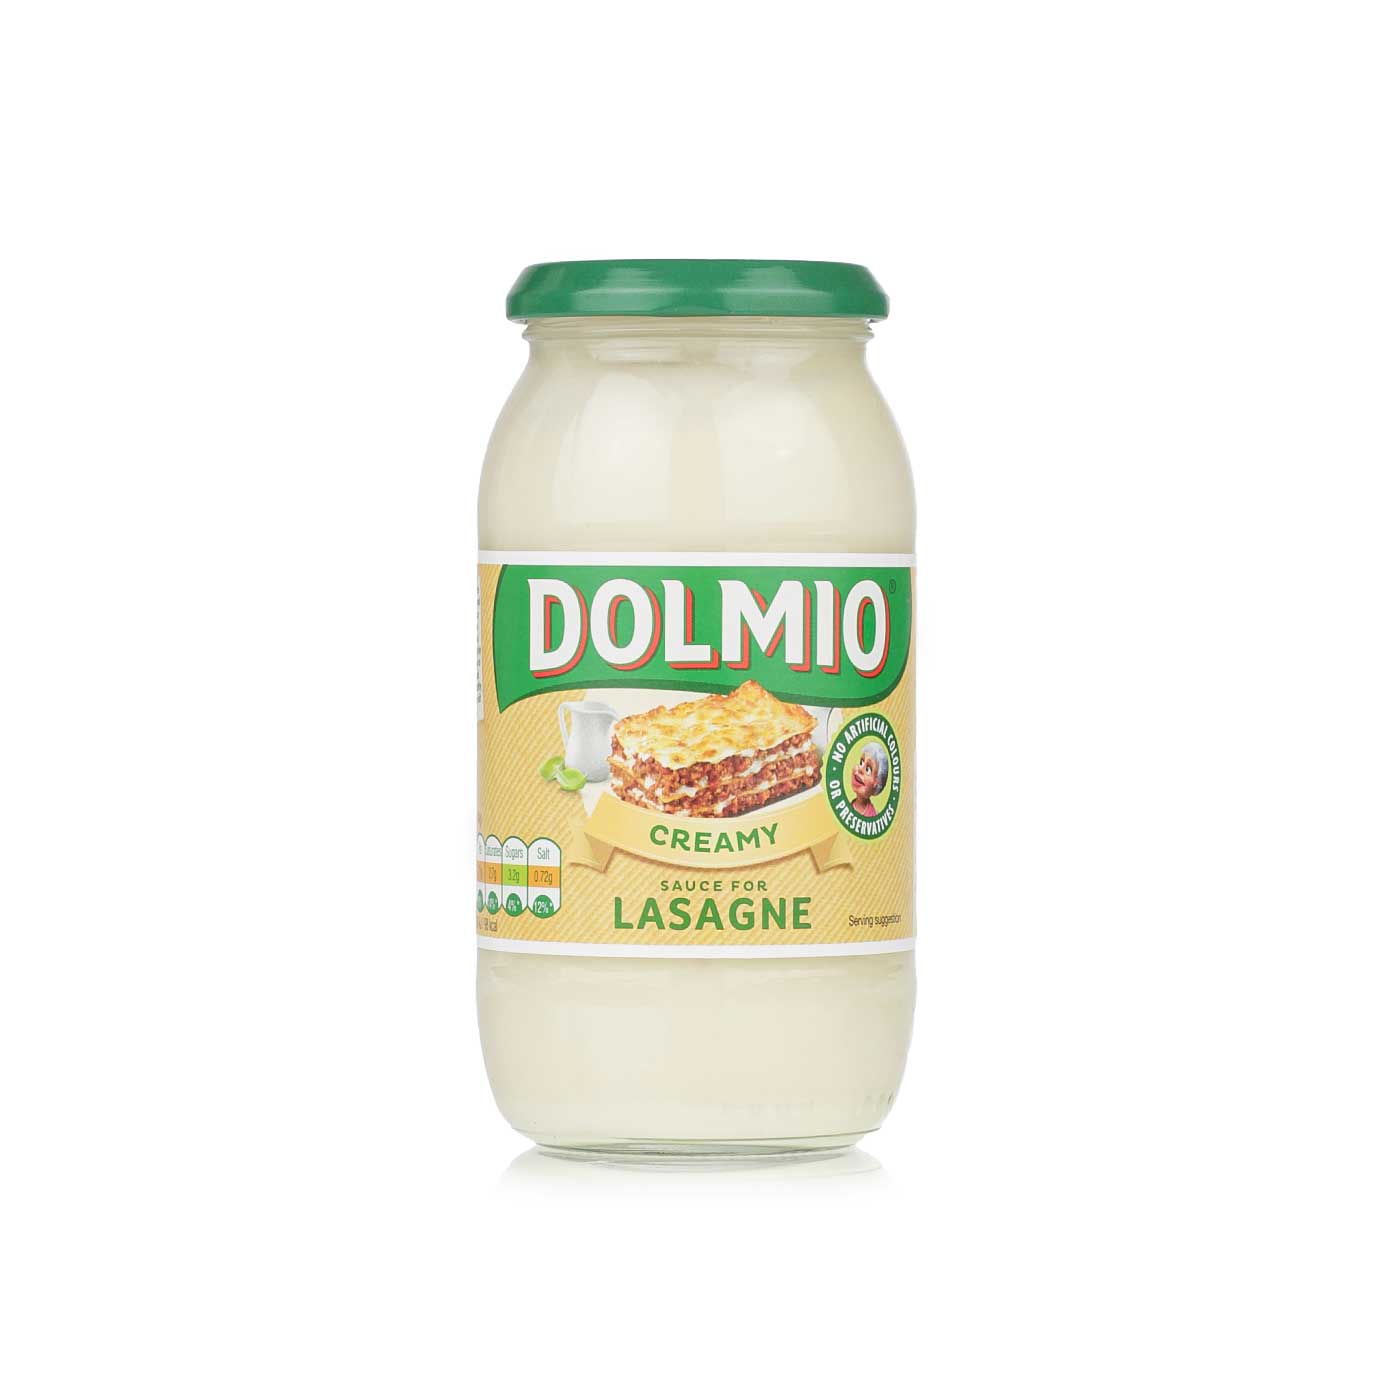 Dolmio lasagne white sauce 470g - Spinneys UAE